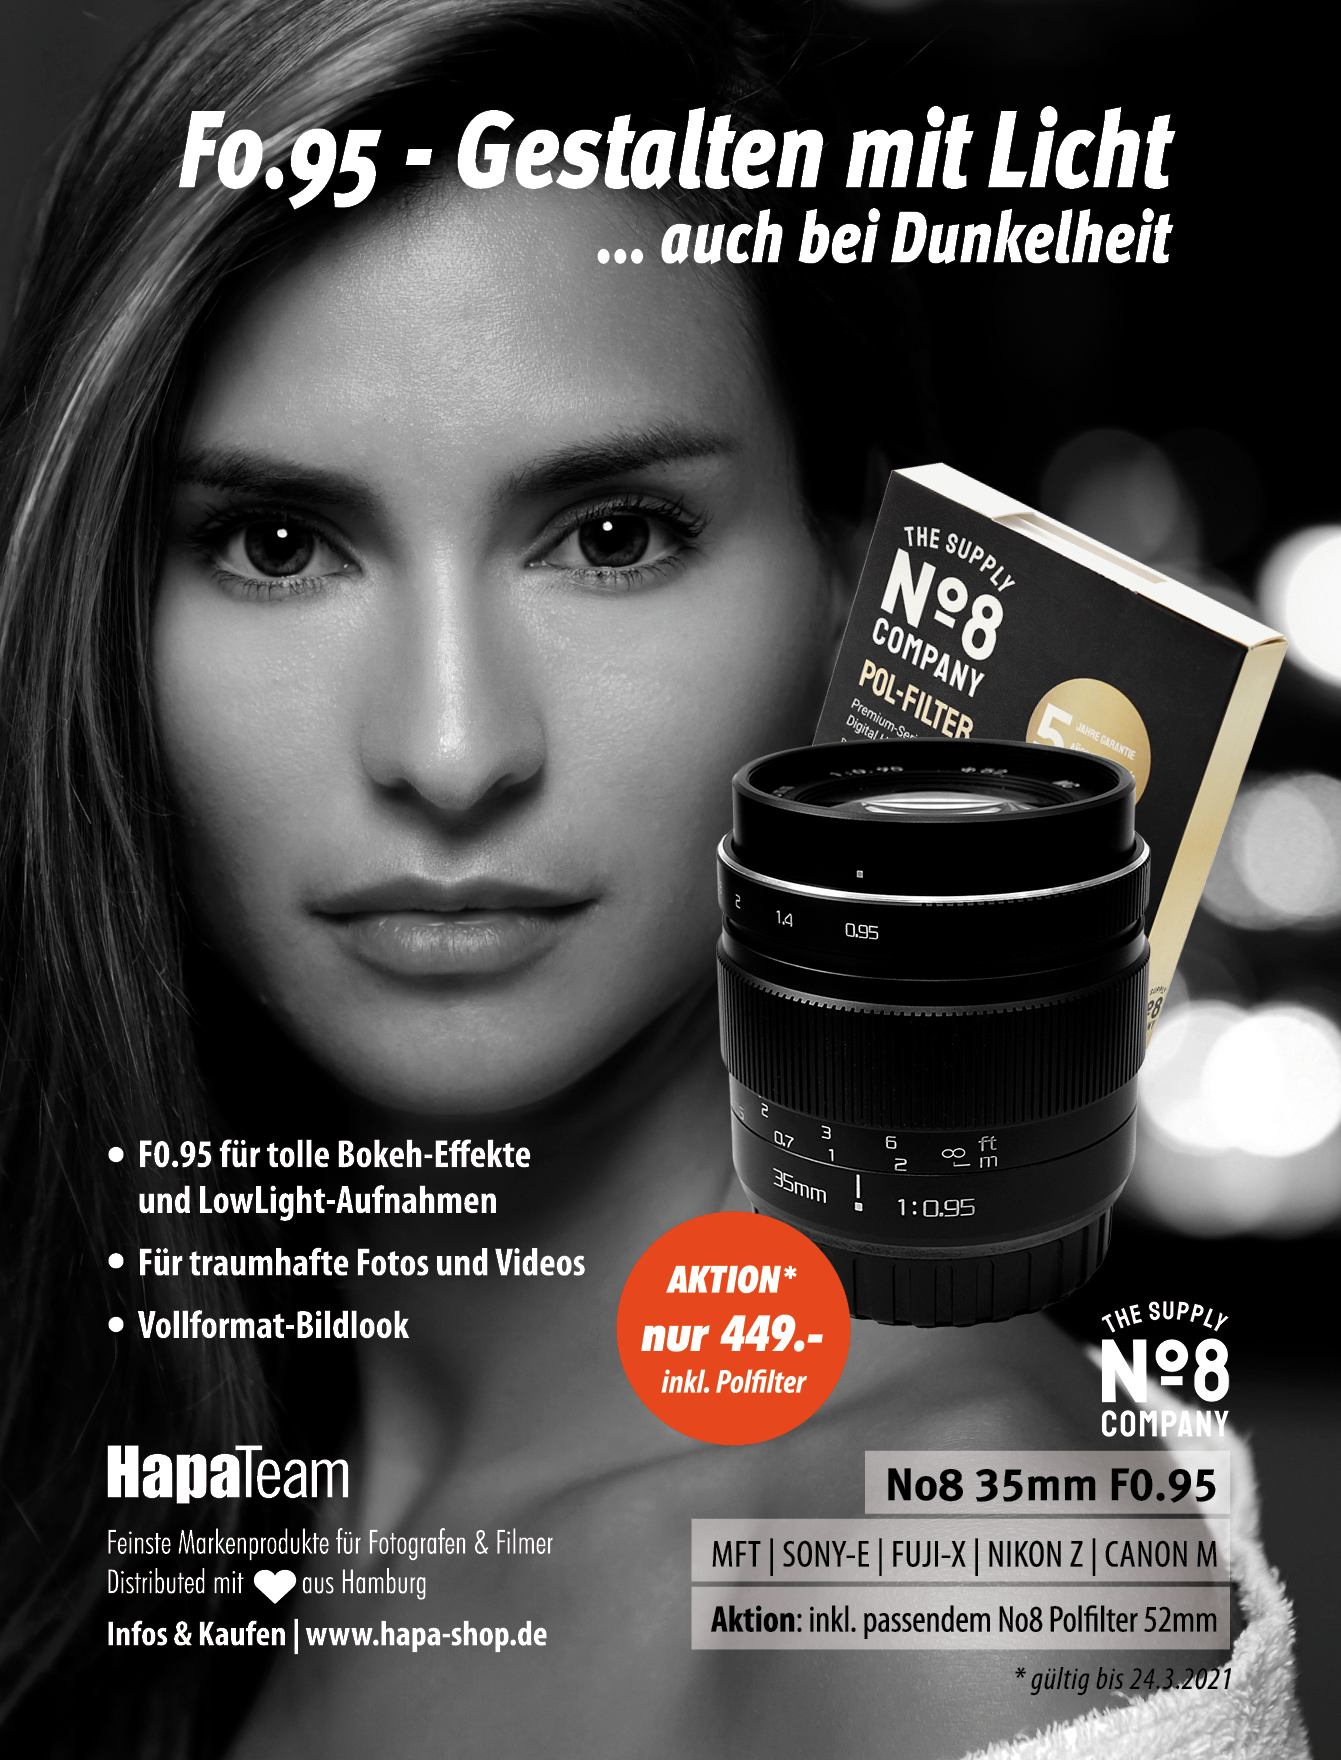 Brand: No8 by HapaTeam